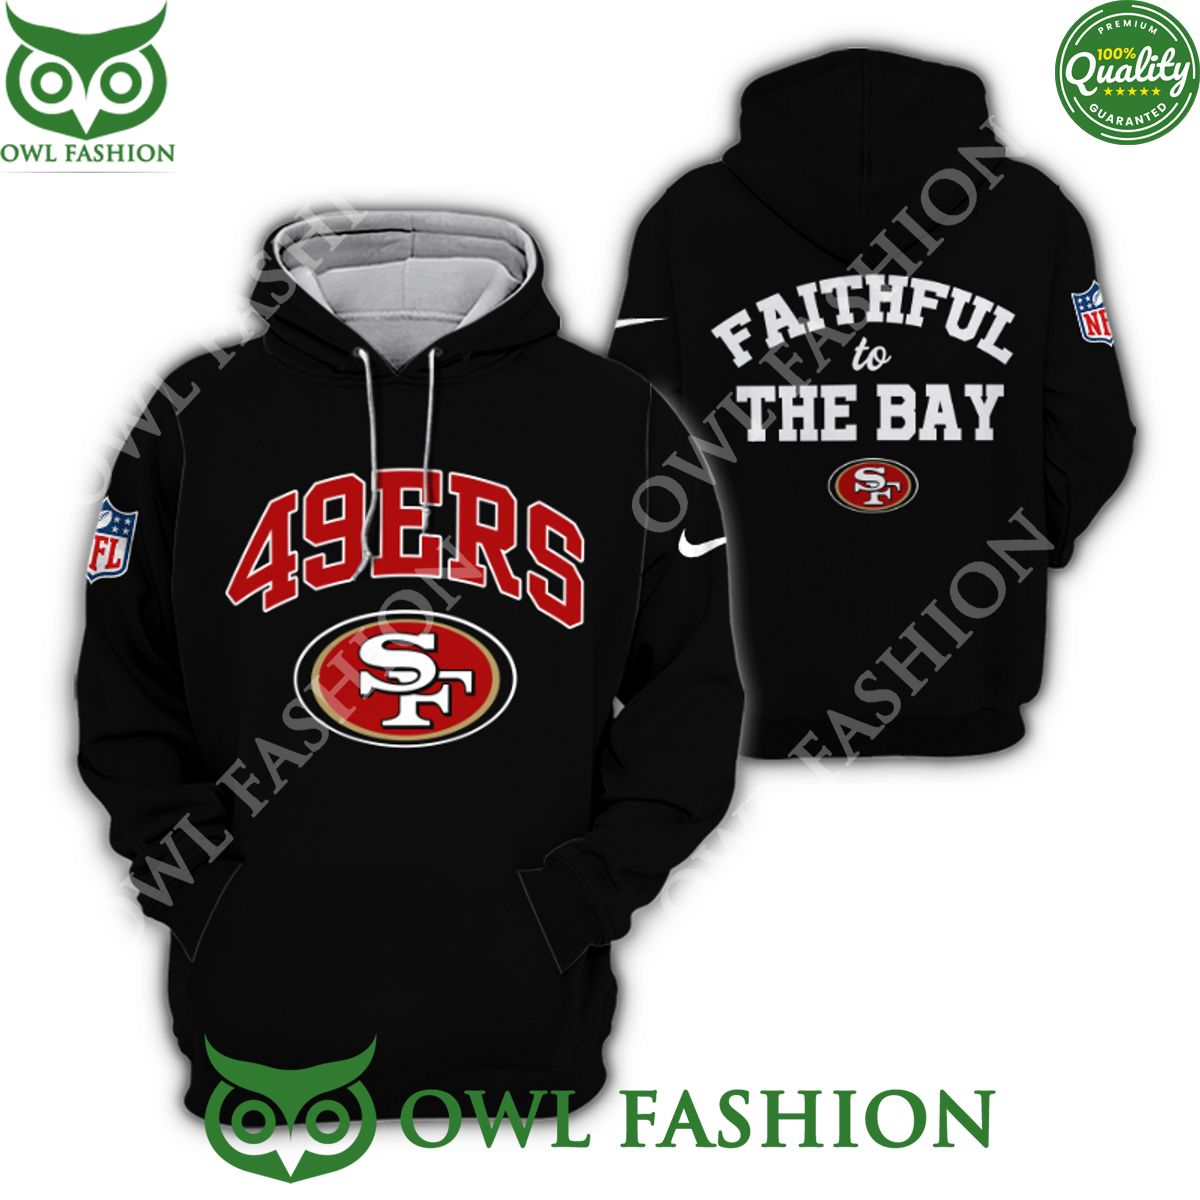 san francisco 49ers faithful to the bay printed hoodie 3d 1 4RQph.jpg